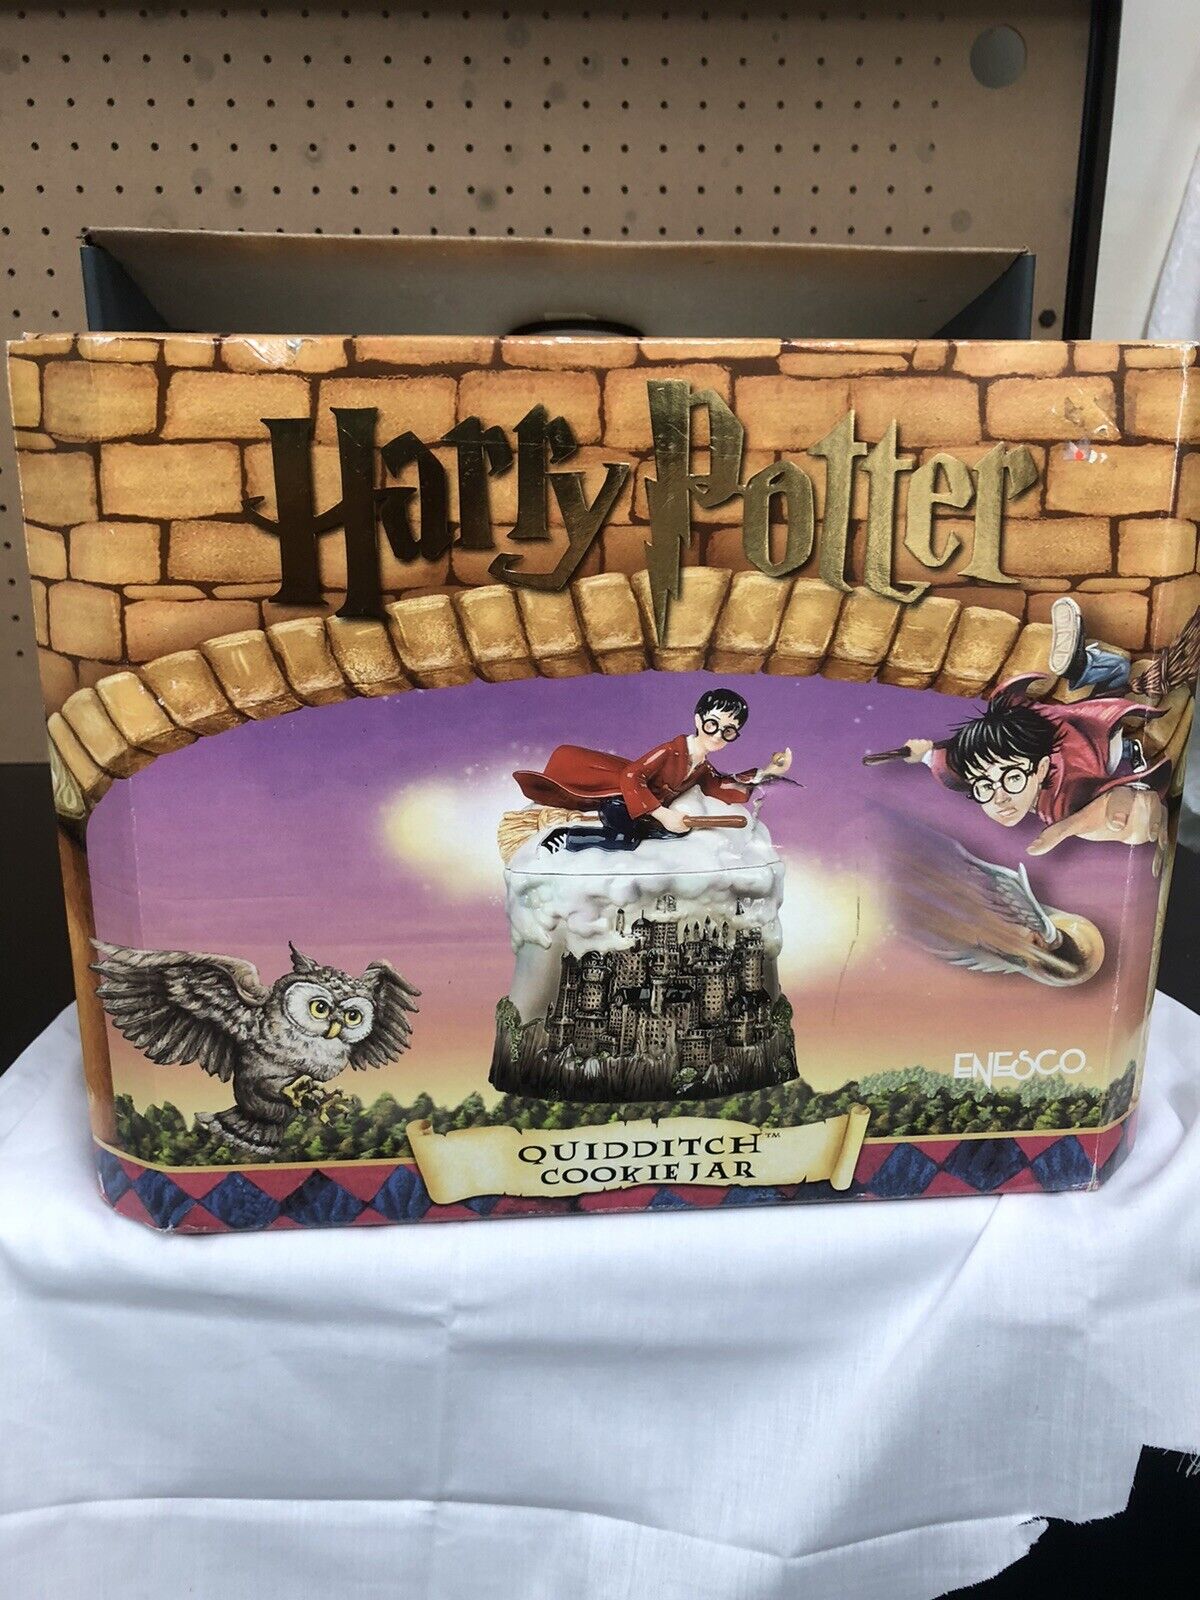 NEW Quidditch ceramic cookie jar 2000 Enesco Harry Potter Hogwarts GREAT SHAPE